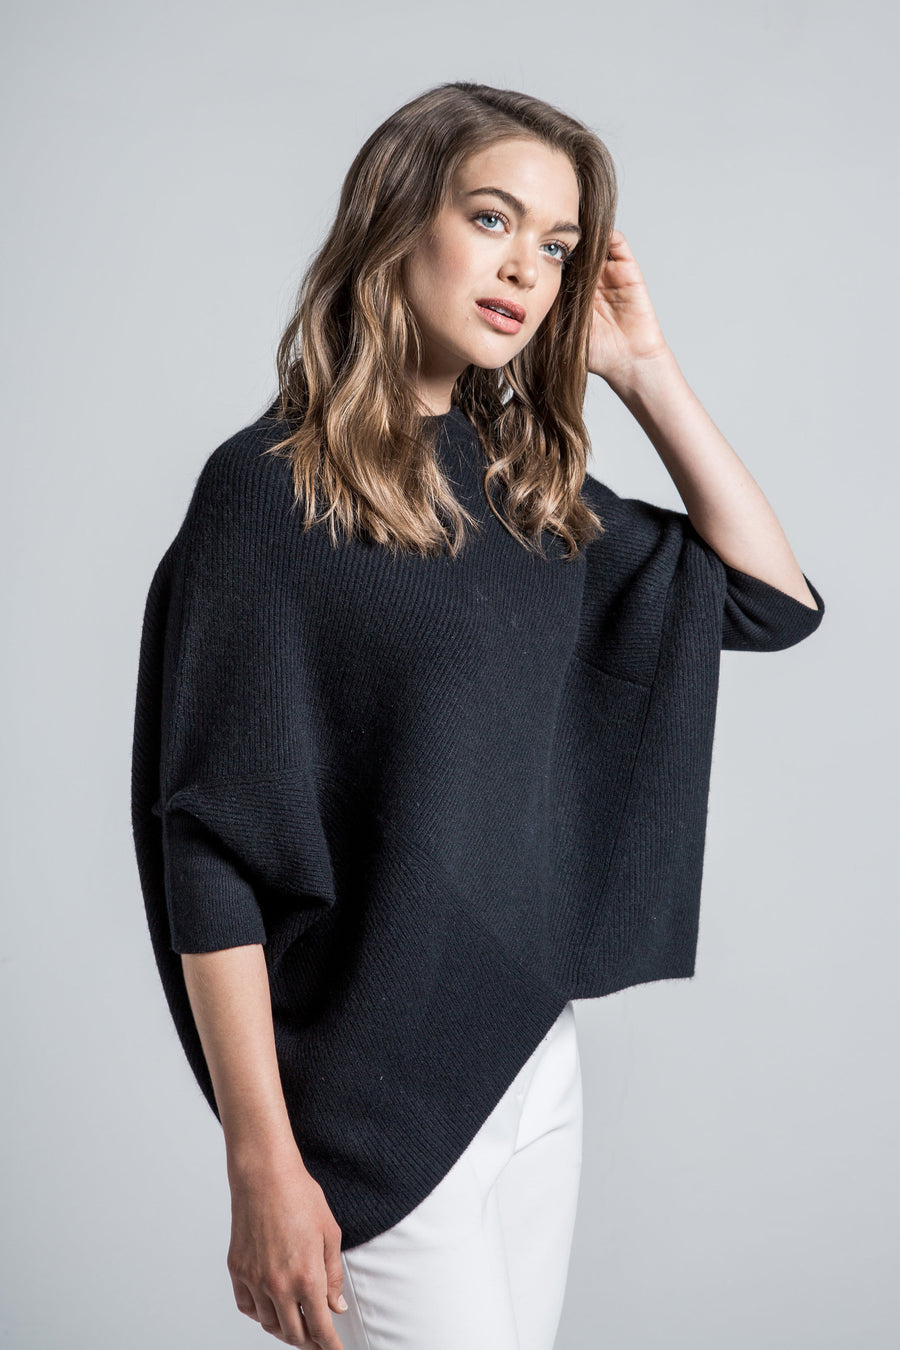 pine cashmere womens cara crewneck 100% pure cashmere poncho sweater in black